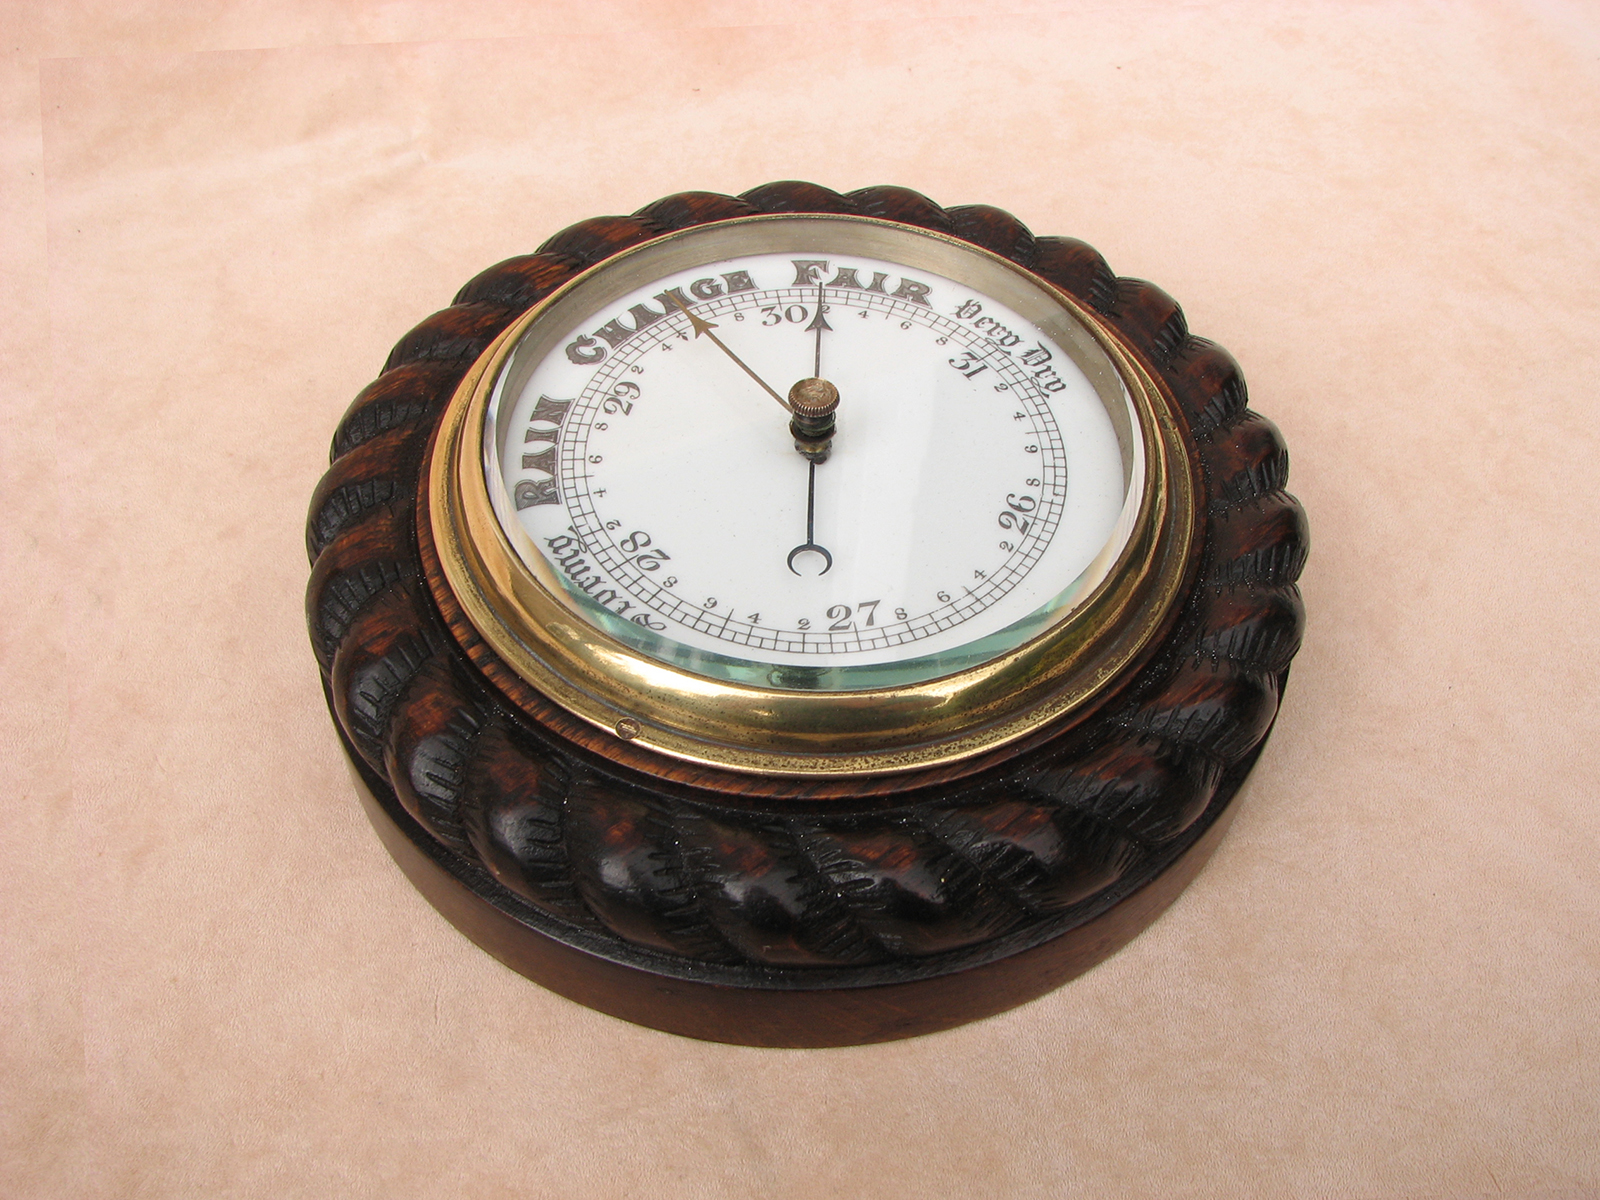 Victorian dark oak cased rope twist aneroid barometer